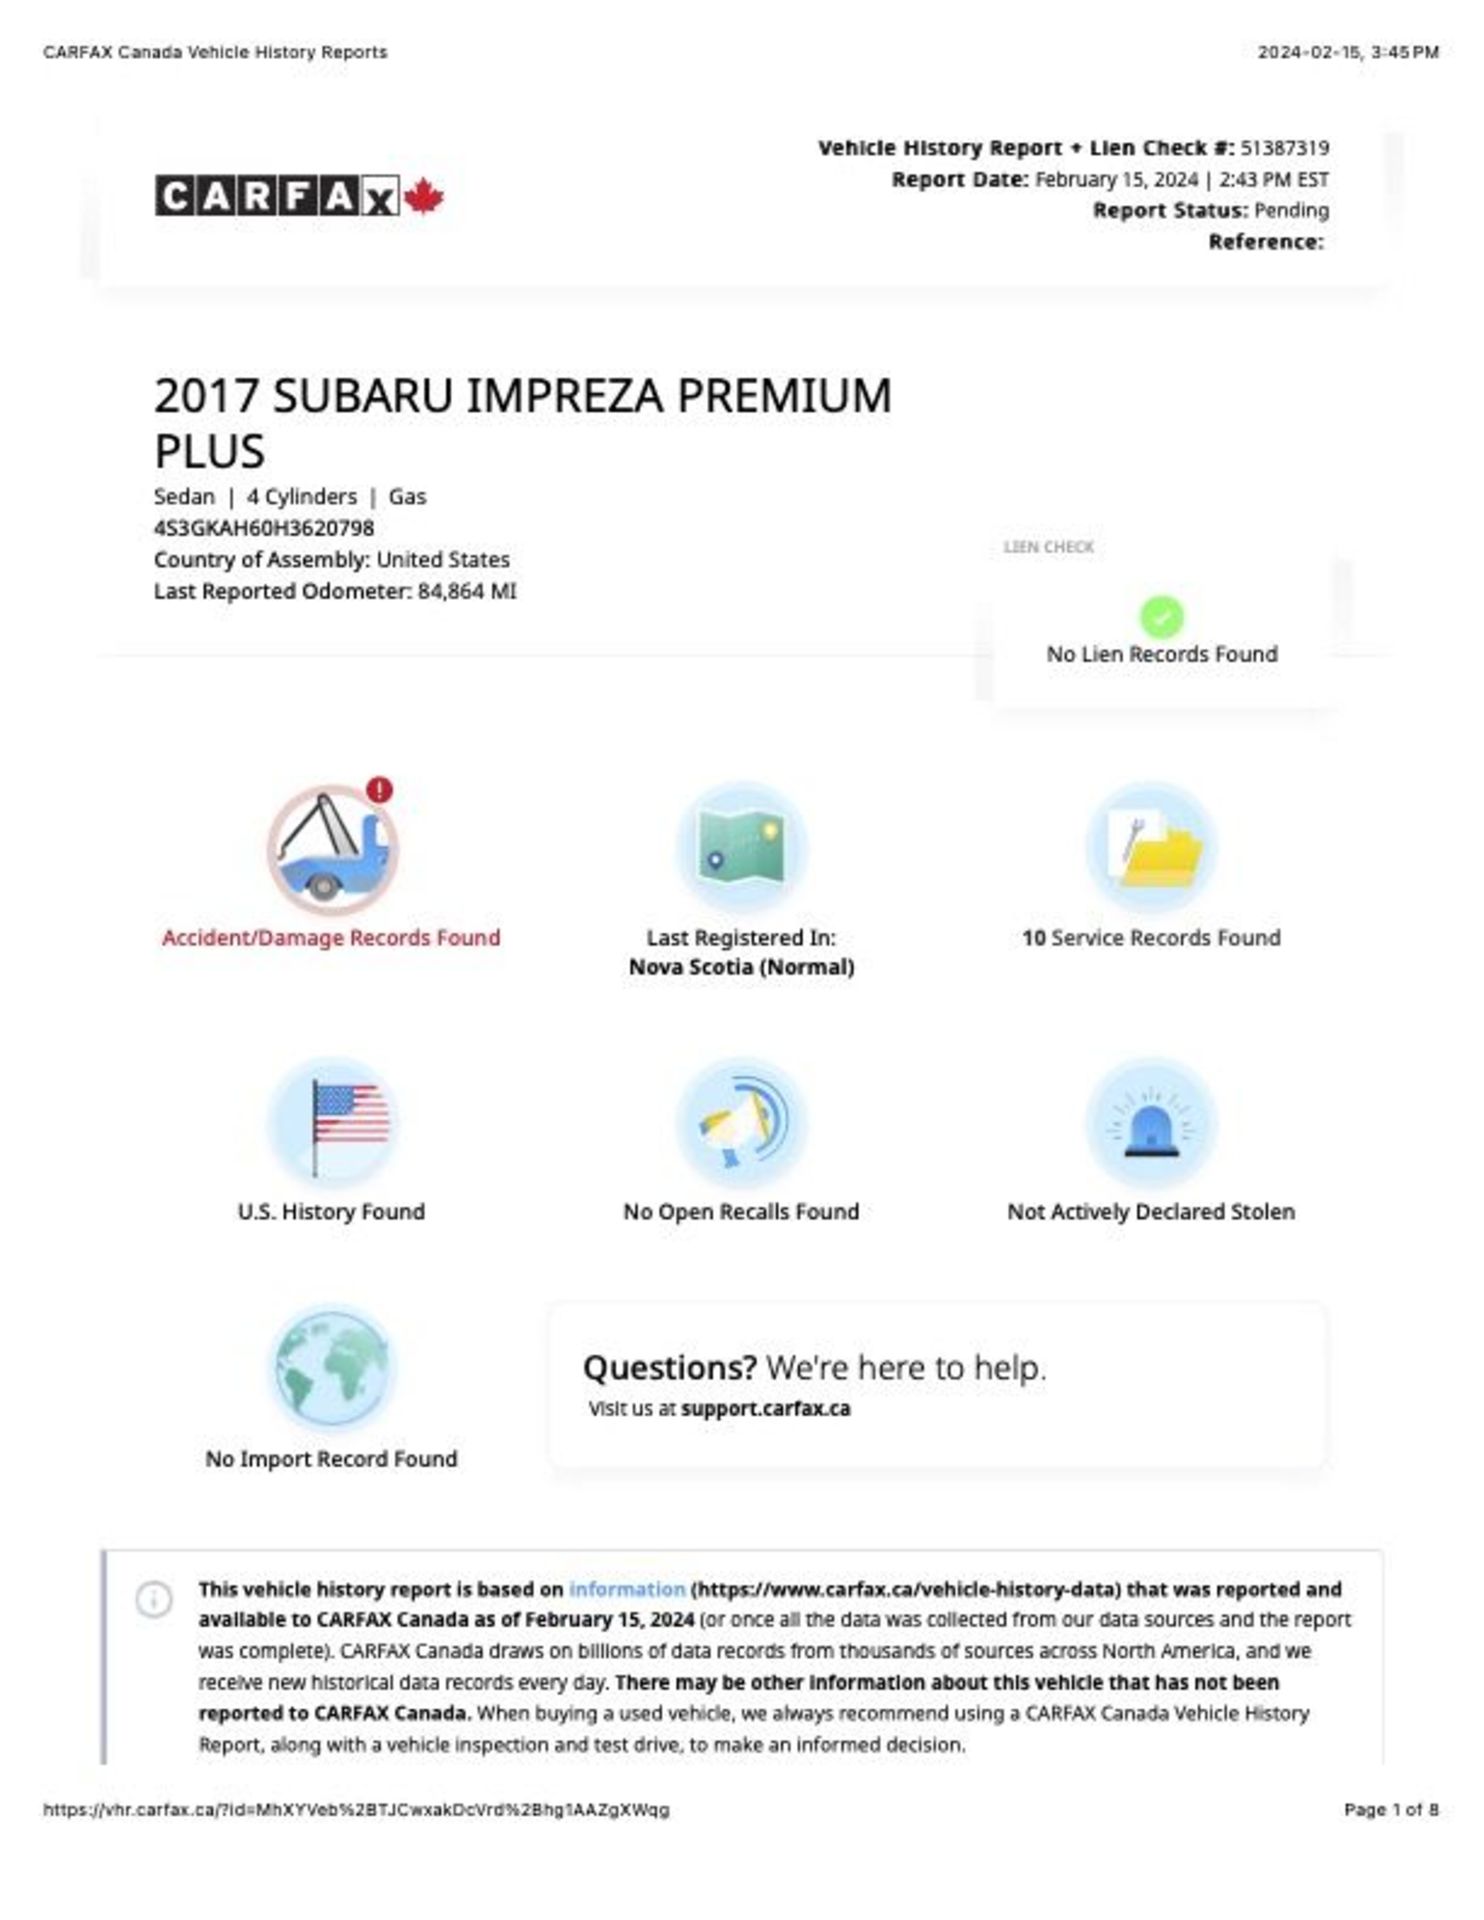 2017 Subaru Impreza - Image 13 of 20